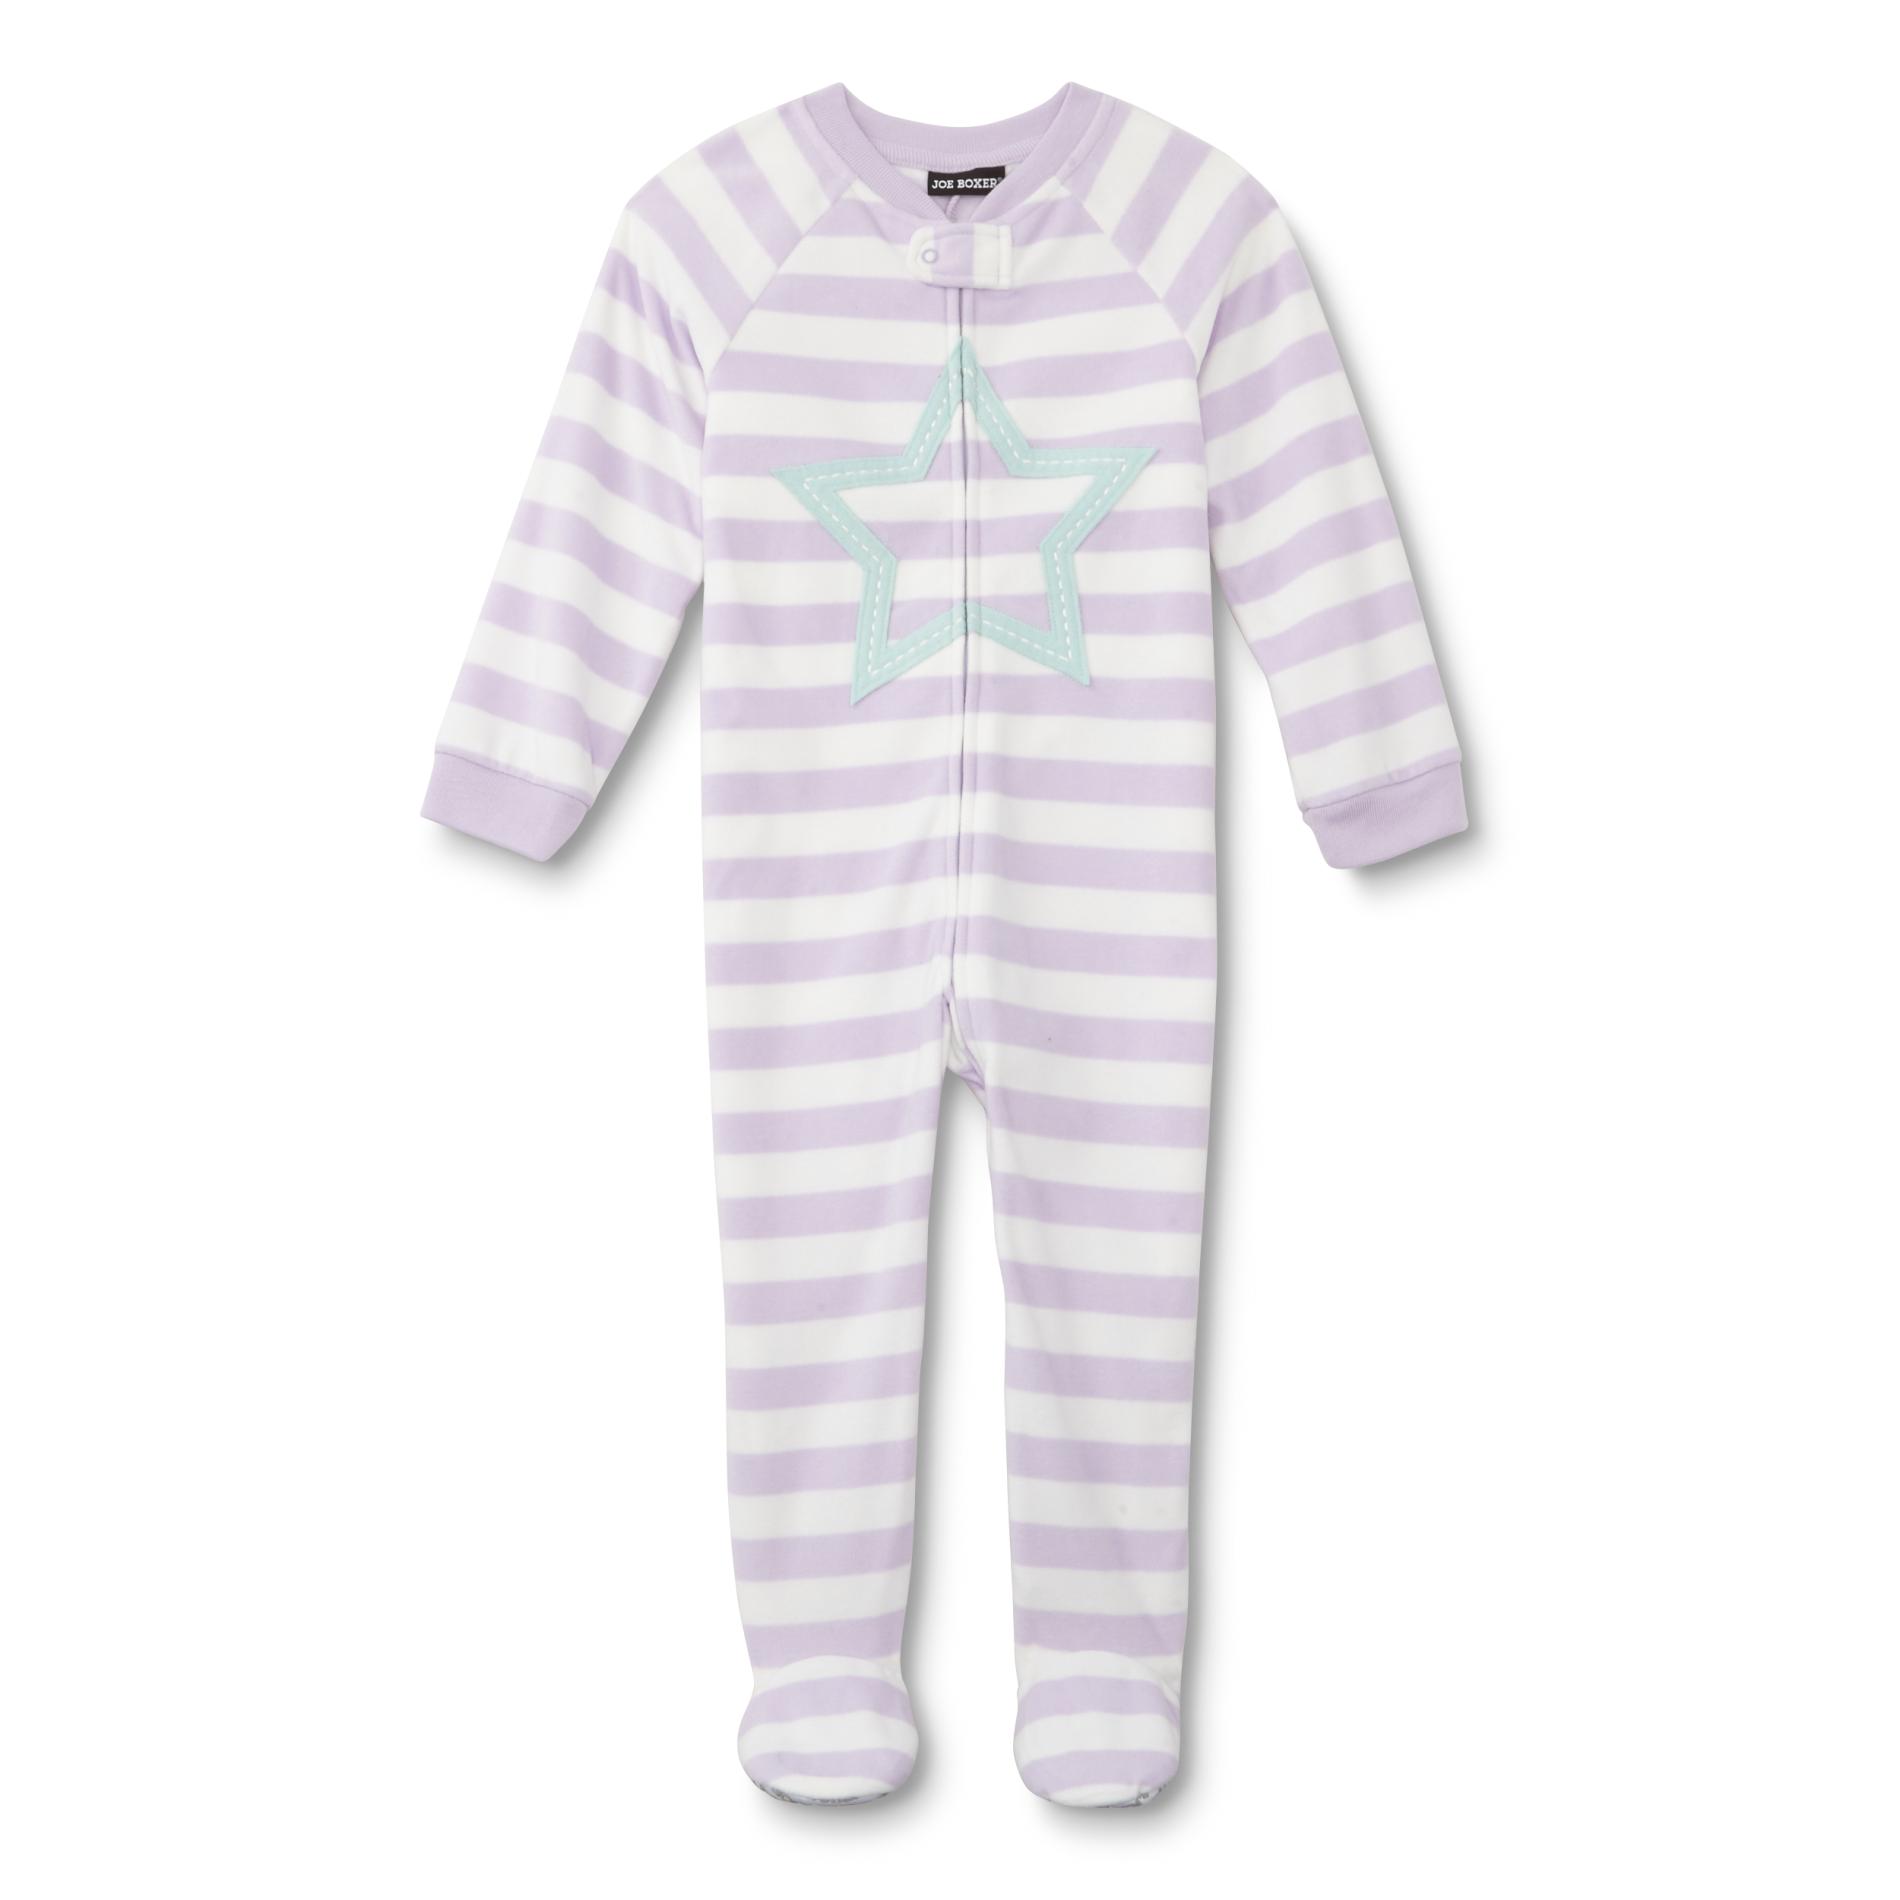 Joe Boxer Infant & Toddler Girl's Footed Sleeper Pajamas - Star